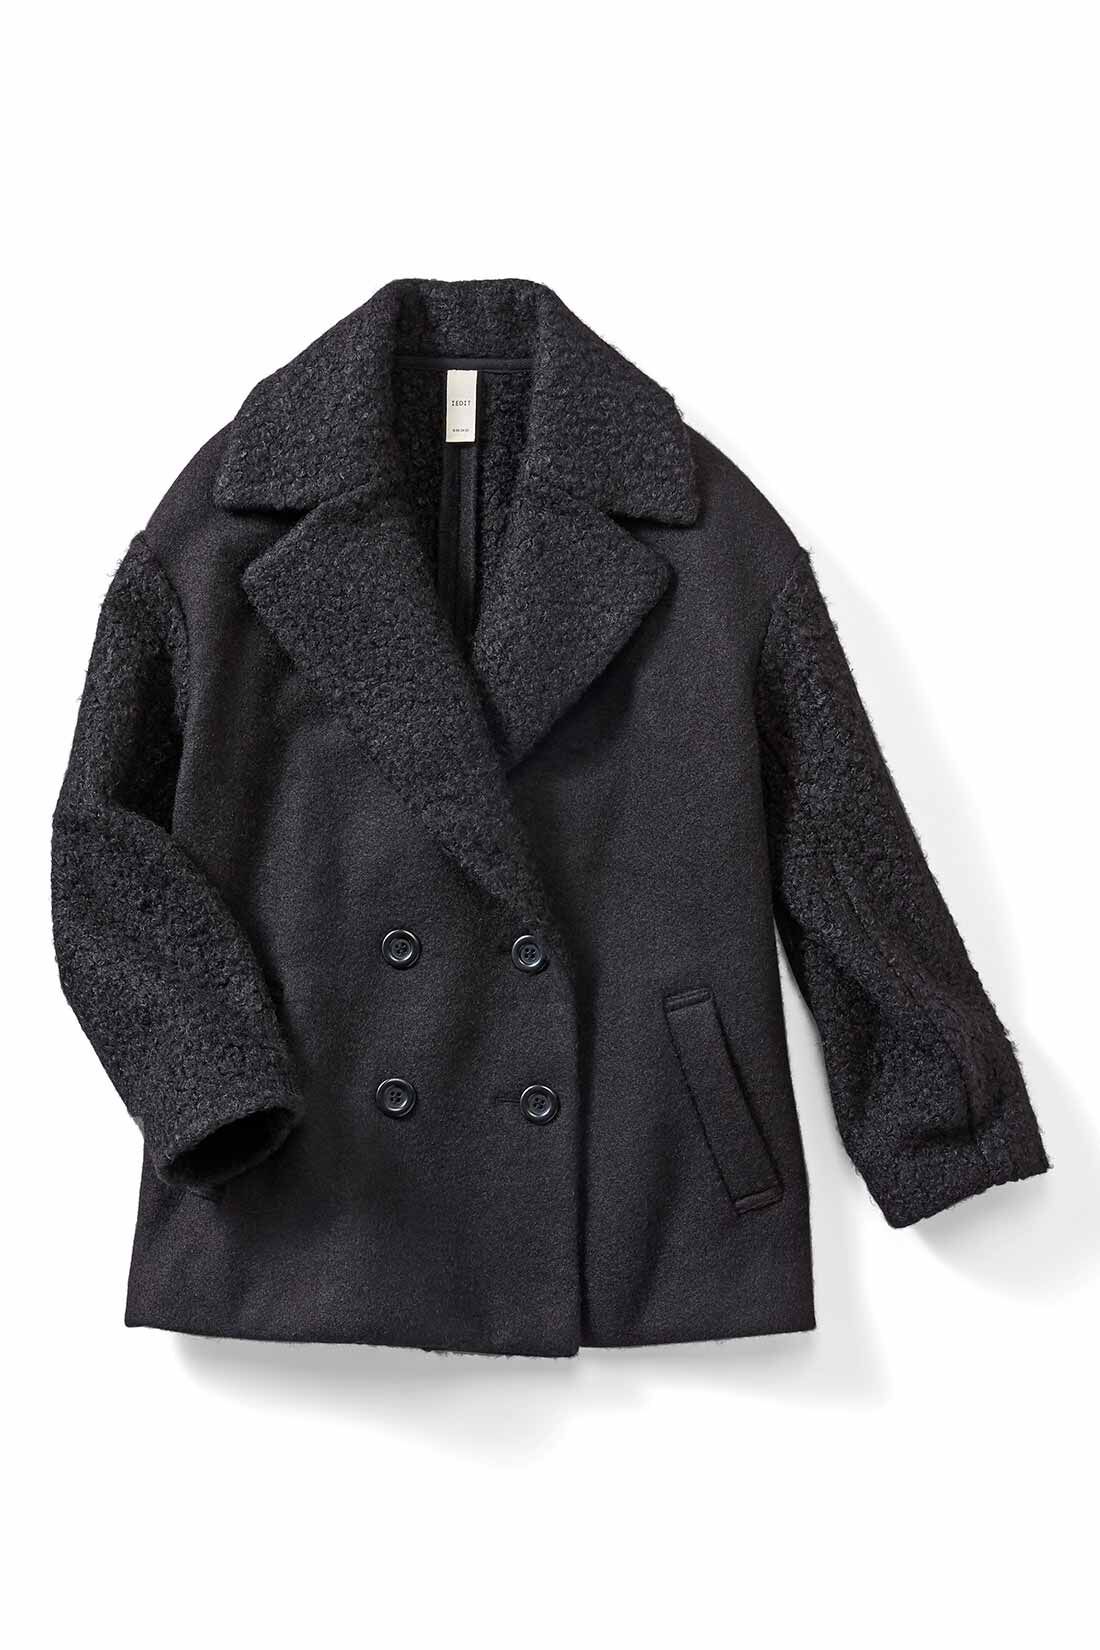 IEDIT|IEDIT[イディット]　ジャケット以上コート未満の大きめラペルとオーバーサイズが今気分のジャコット〈ブラック〉